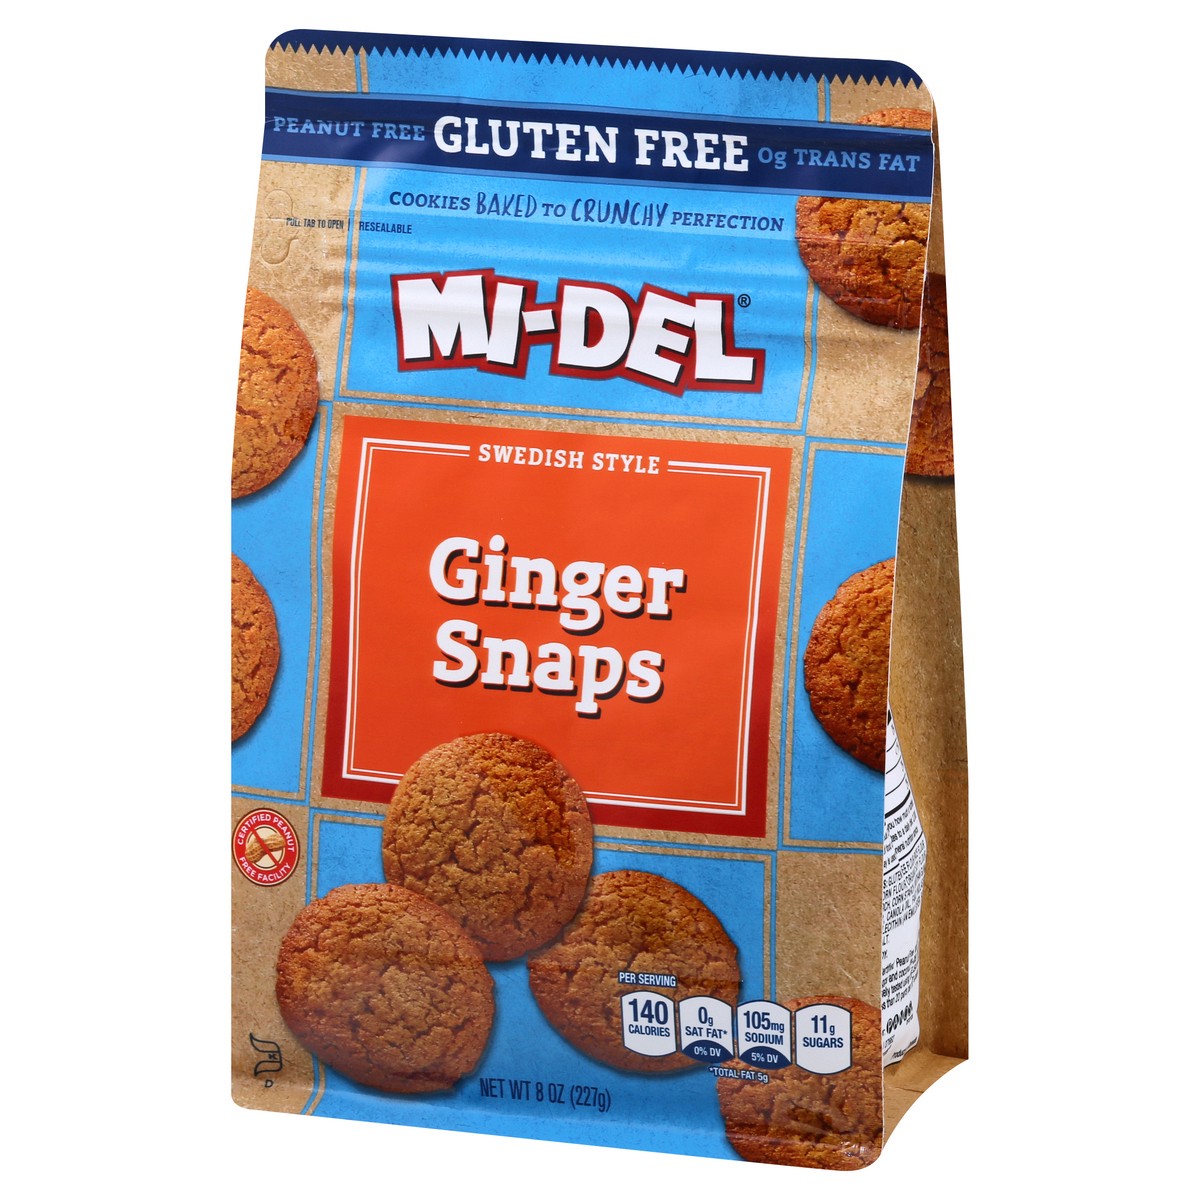 slide 11 of 12, MI-Del Midel Gluten Free Ginger Snaps, 8 oz